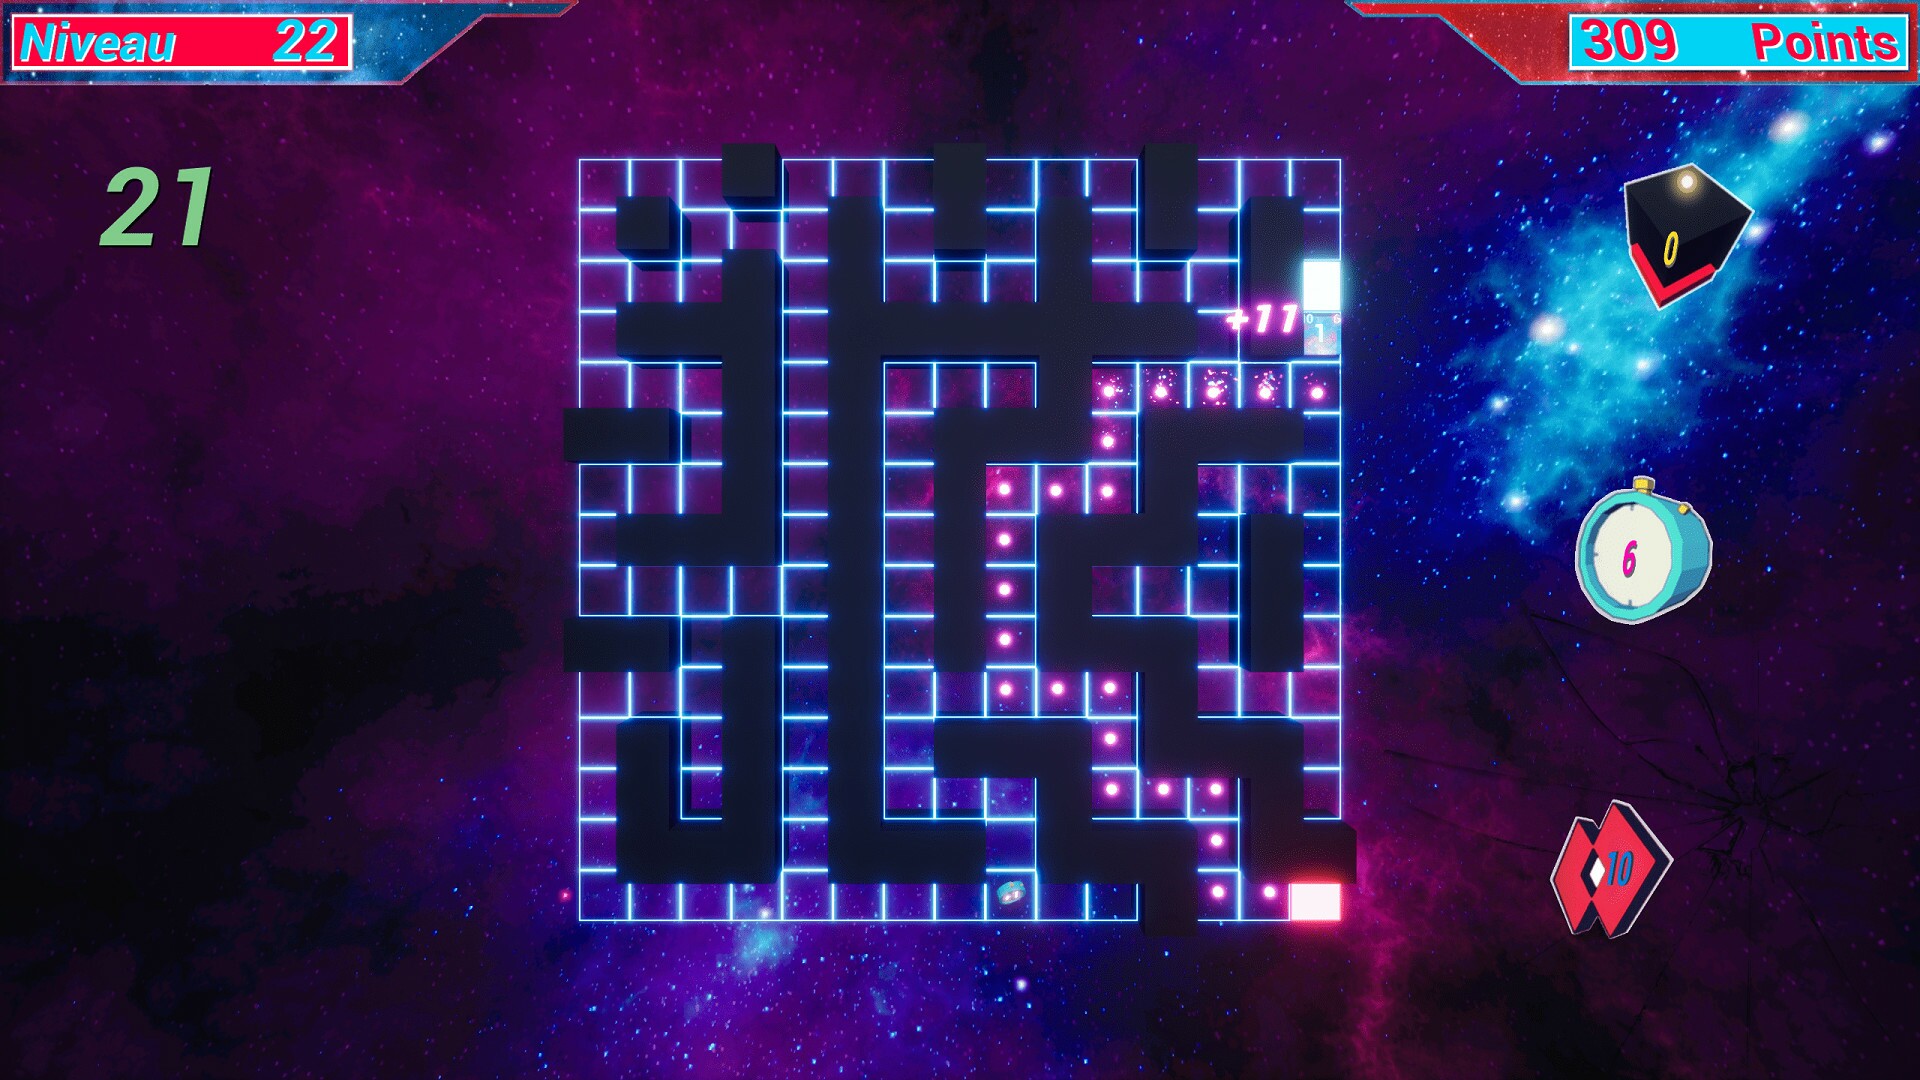 Игра про память. Supernova игра. Maze mem. G30 - a Memory Maze. Memory Maze Mr Love Victor Tour to Deep Space.